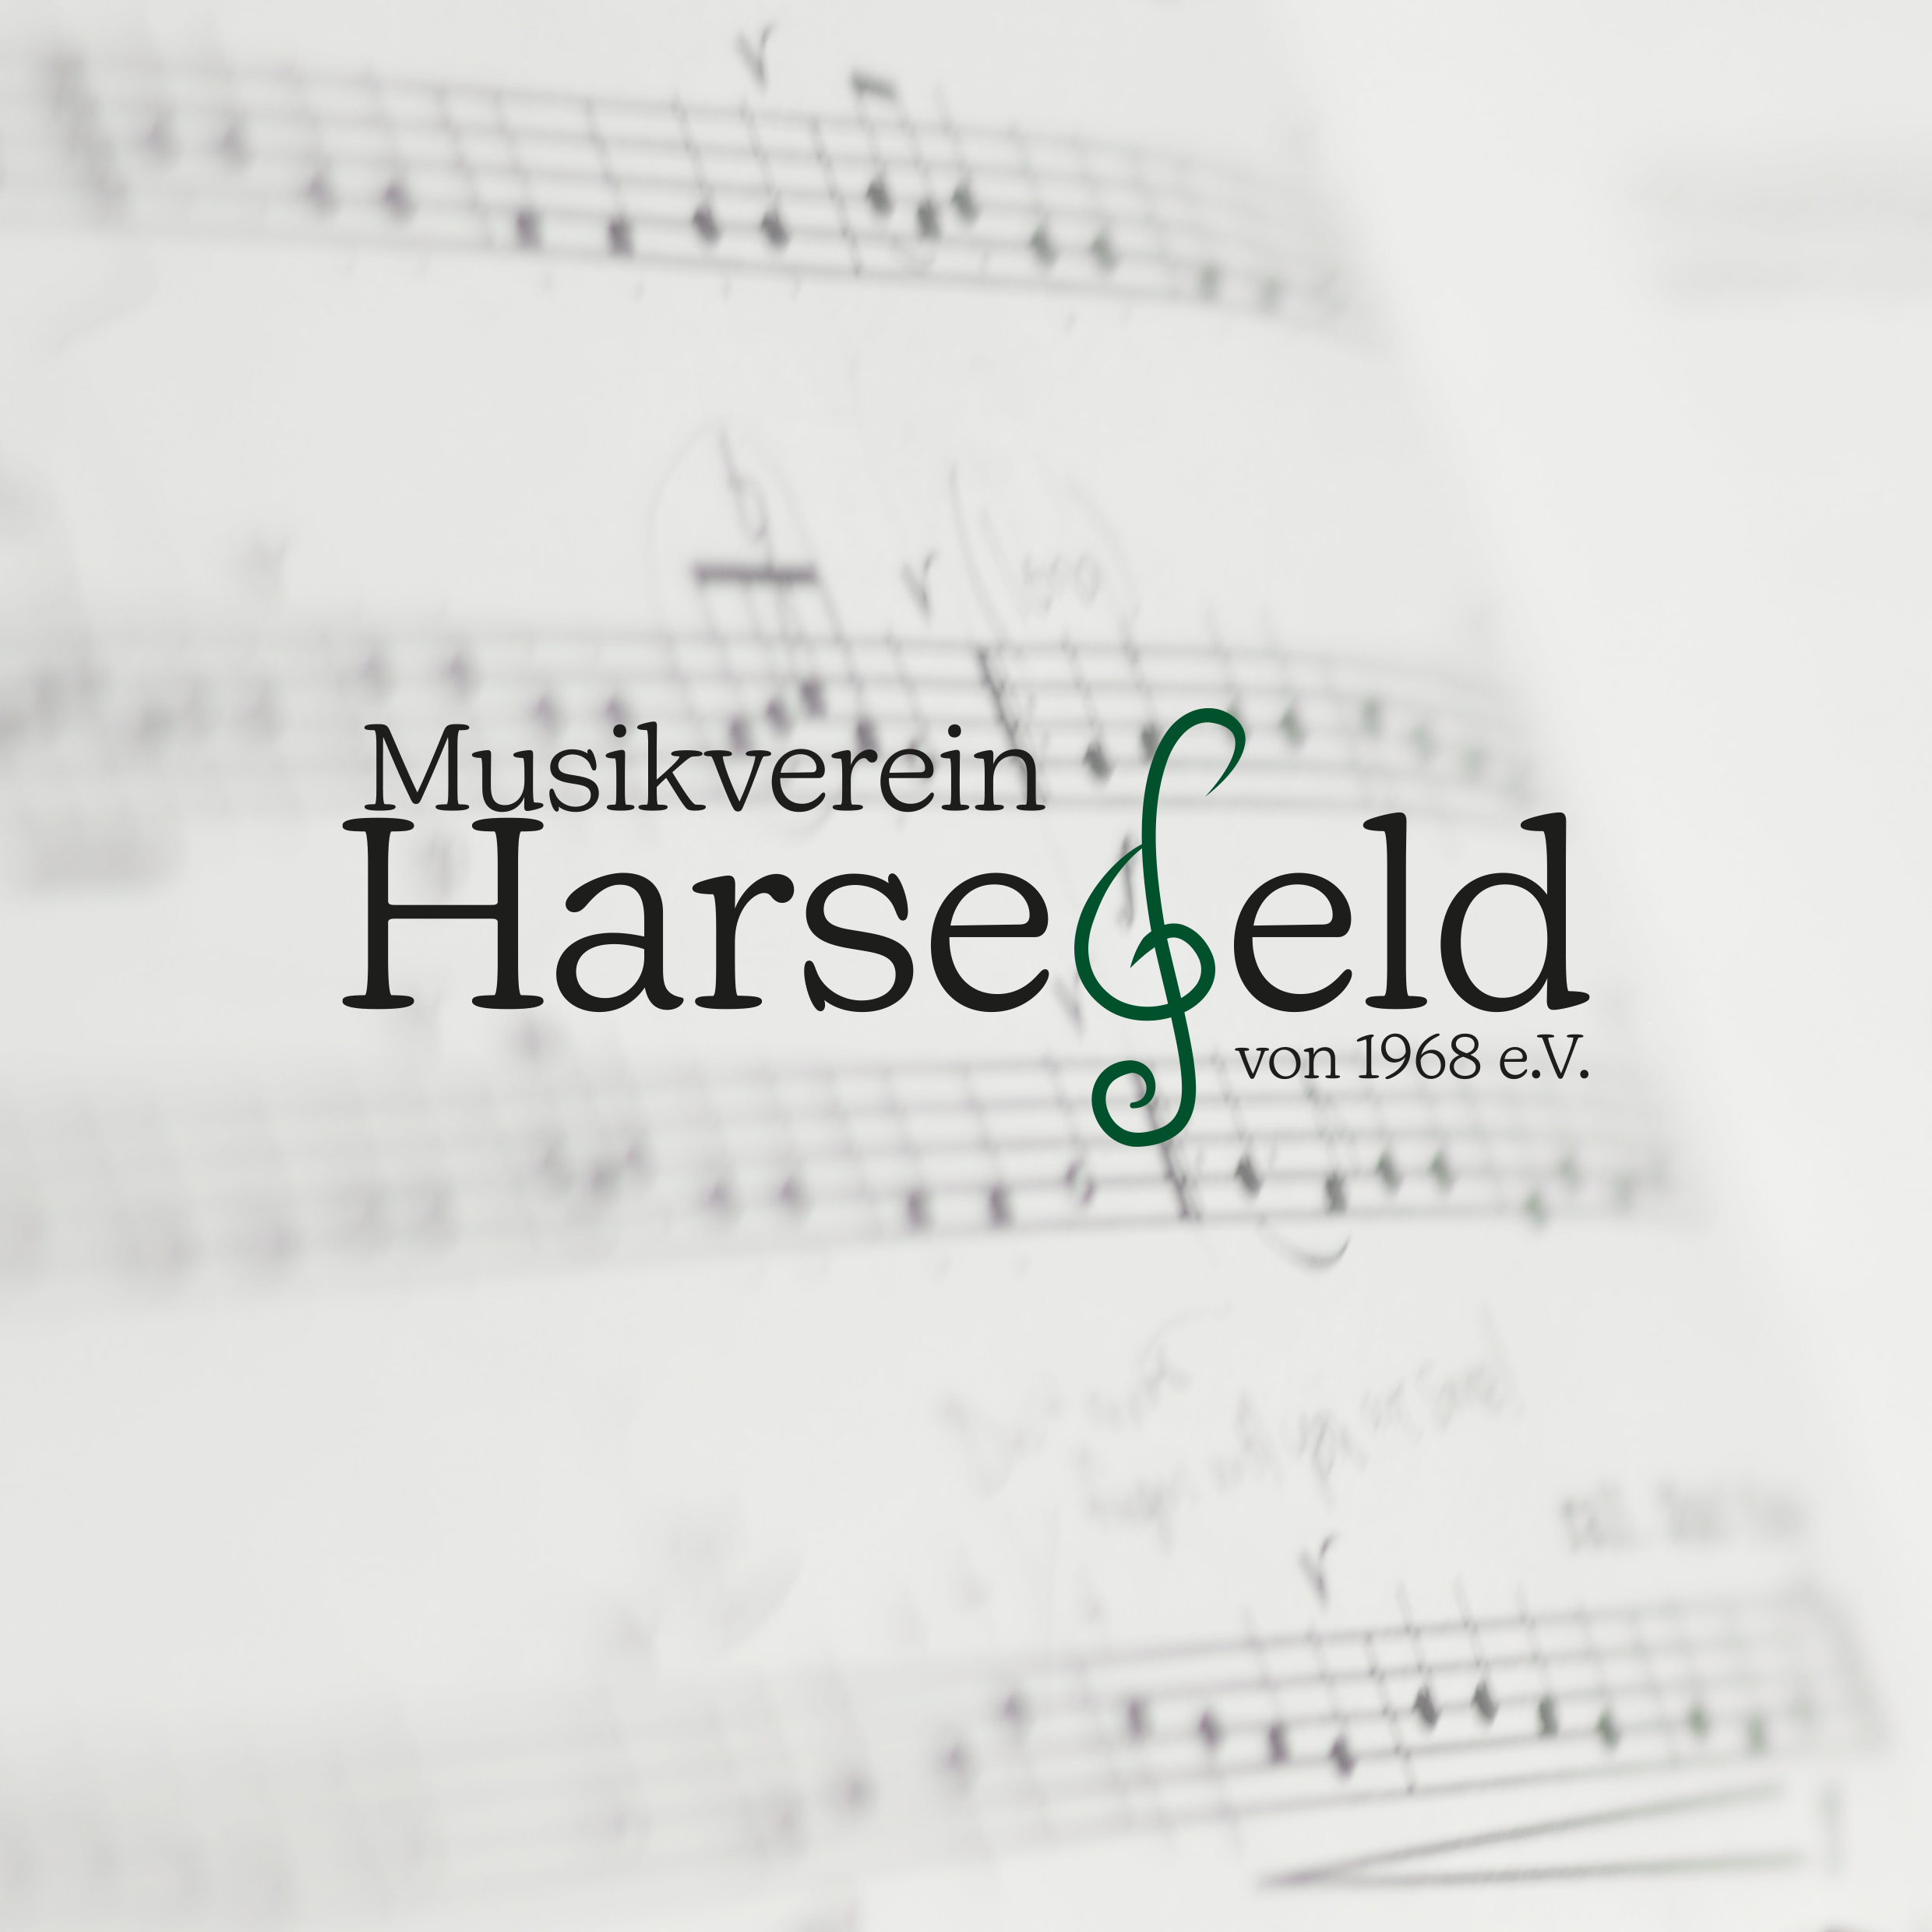 MV Harsefeld